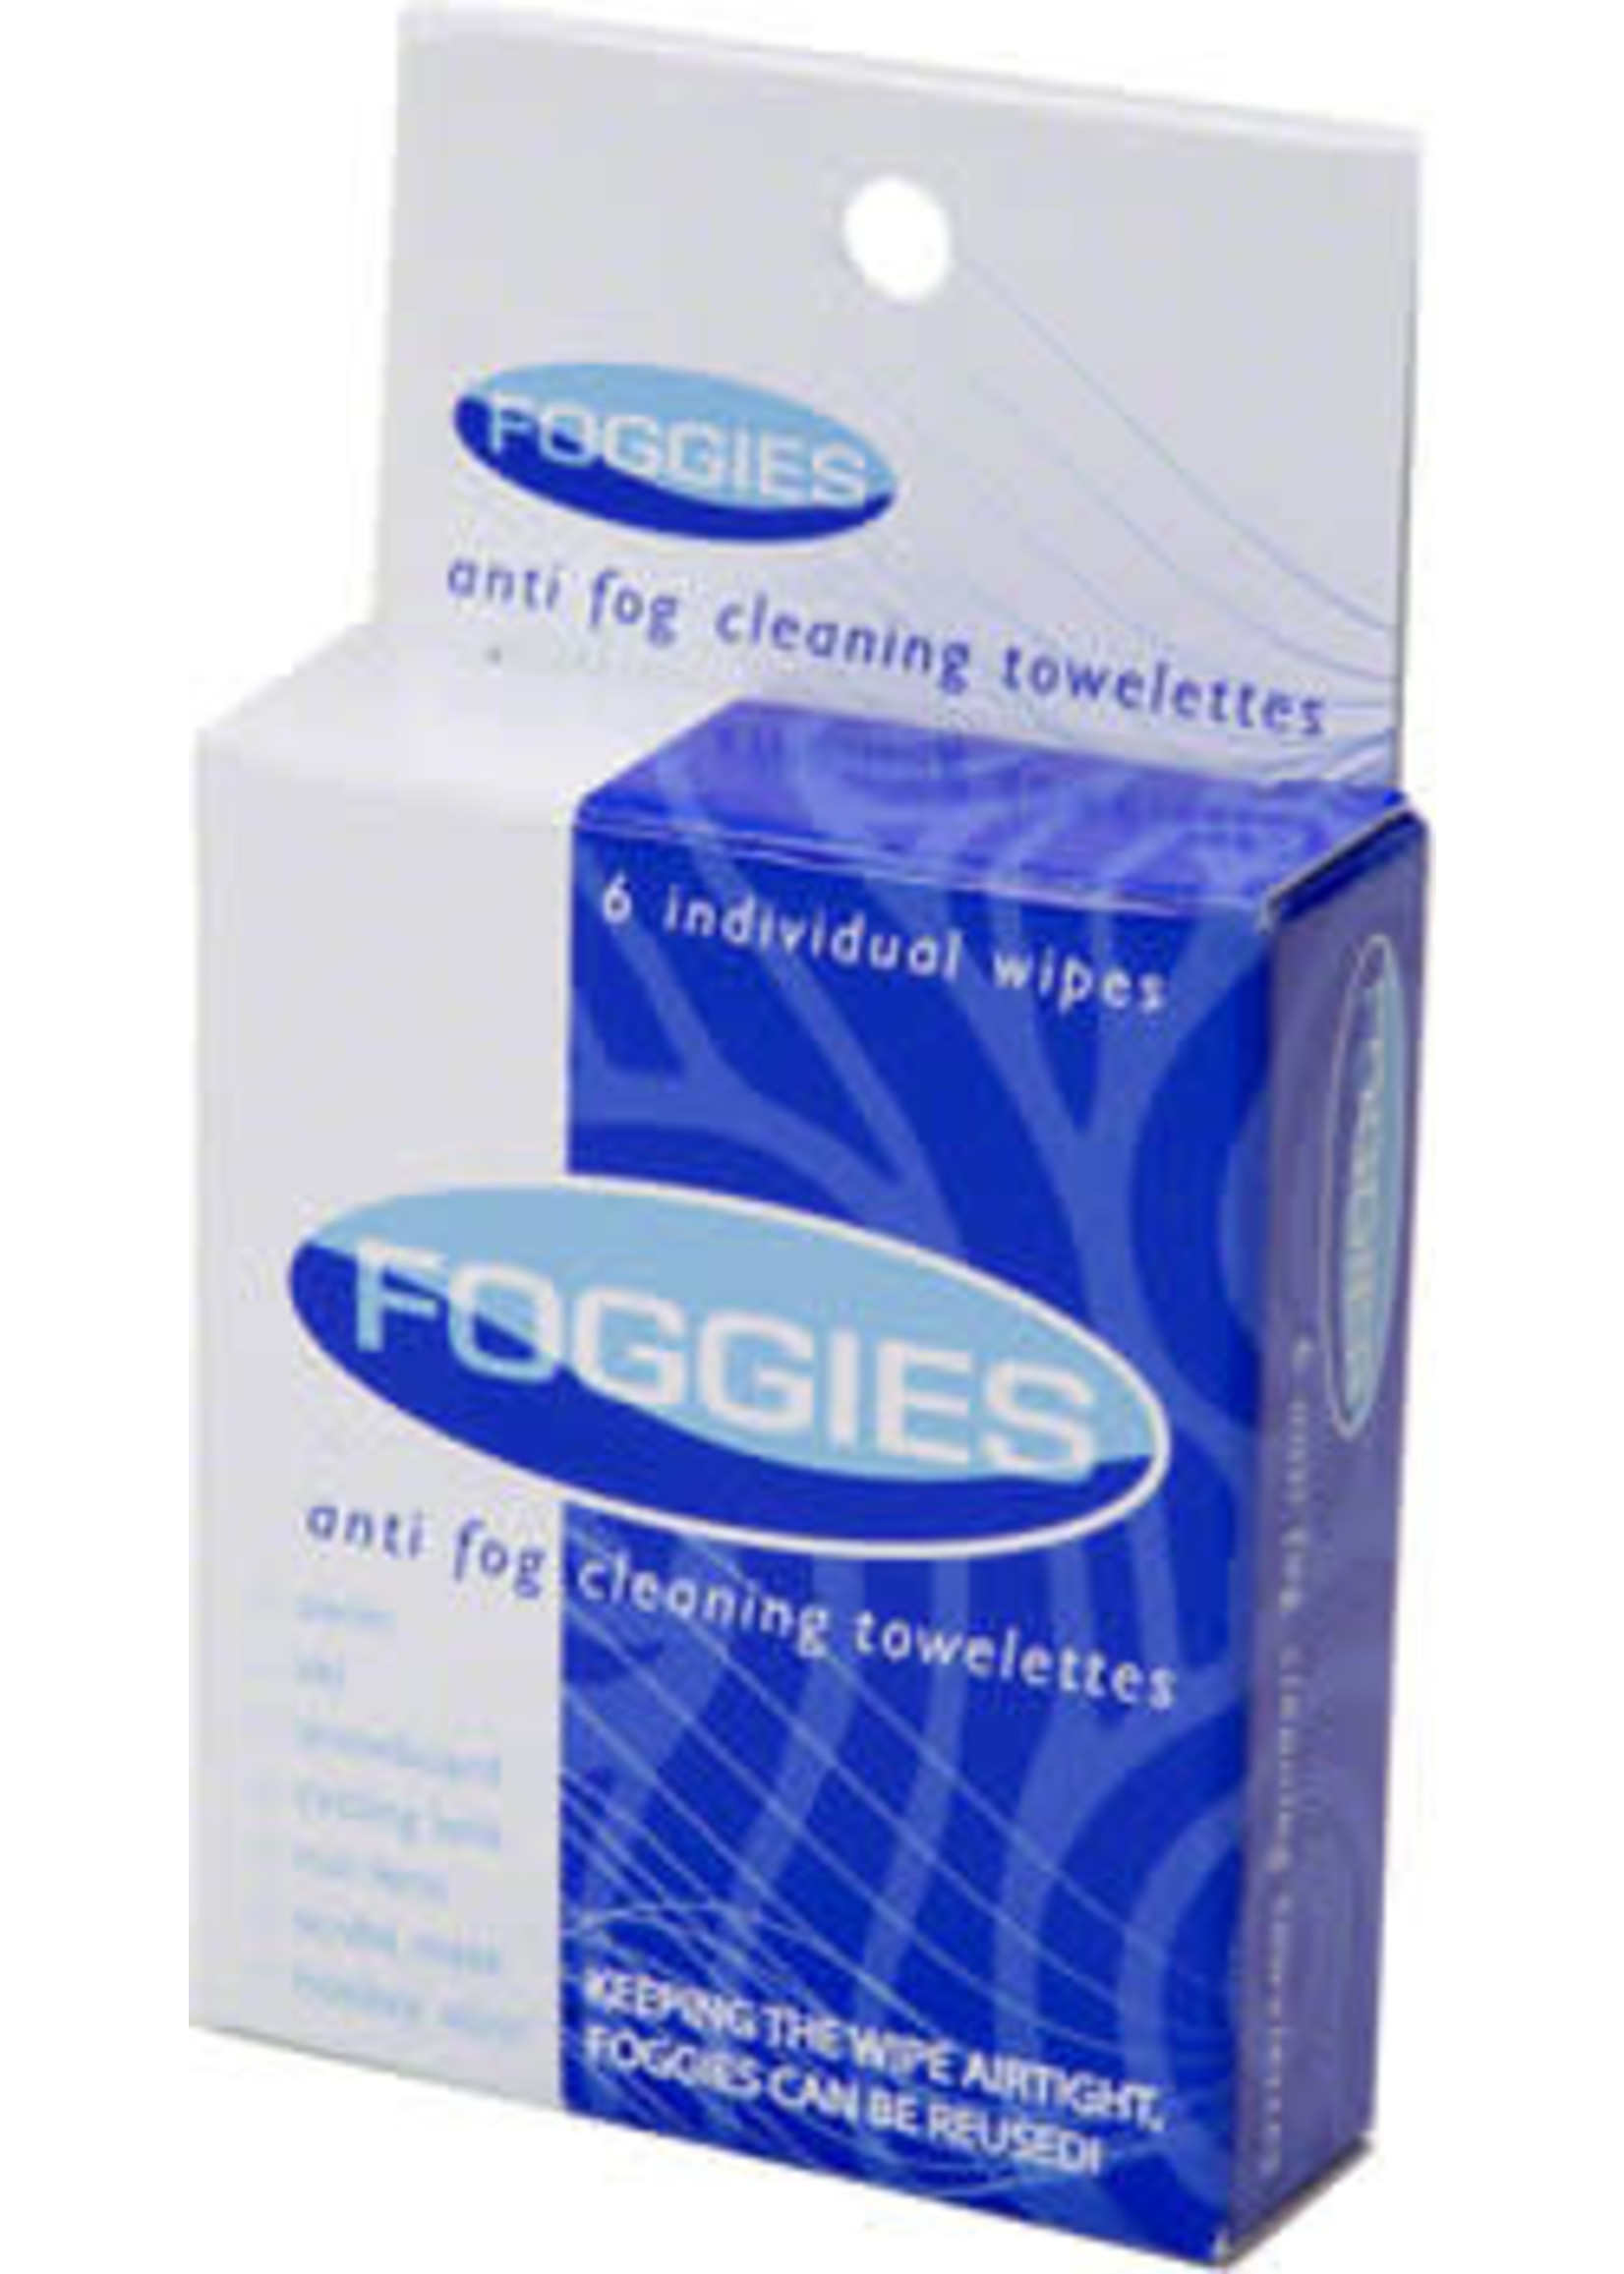 Foggies Foggies Anti fog cleaning towelettes 6 pack